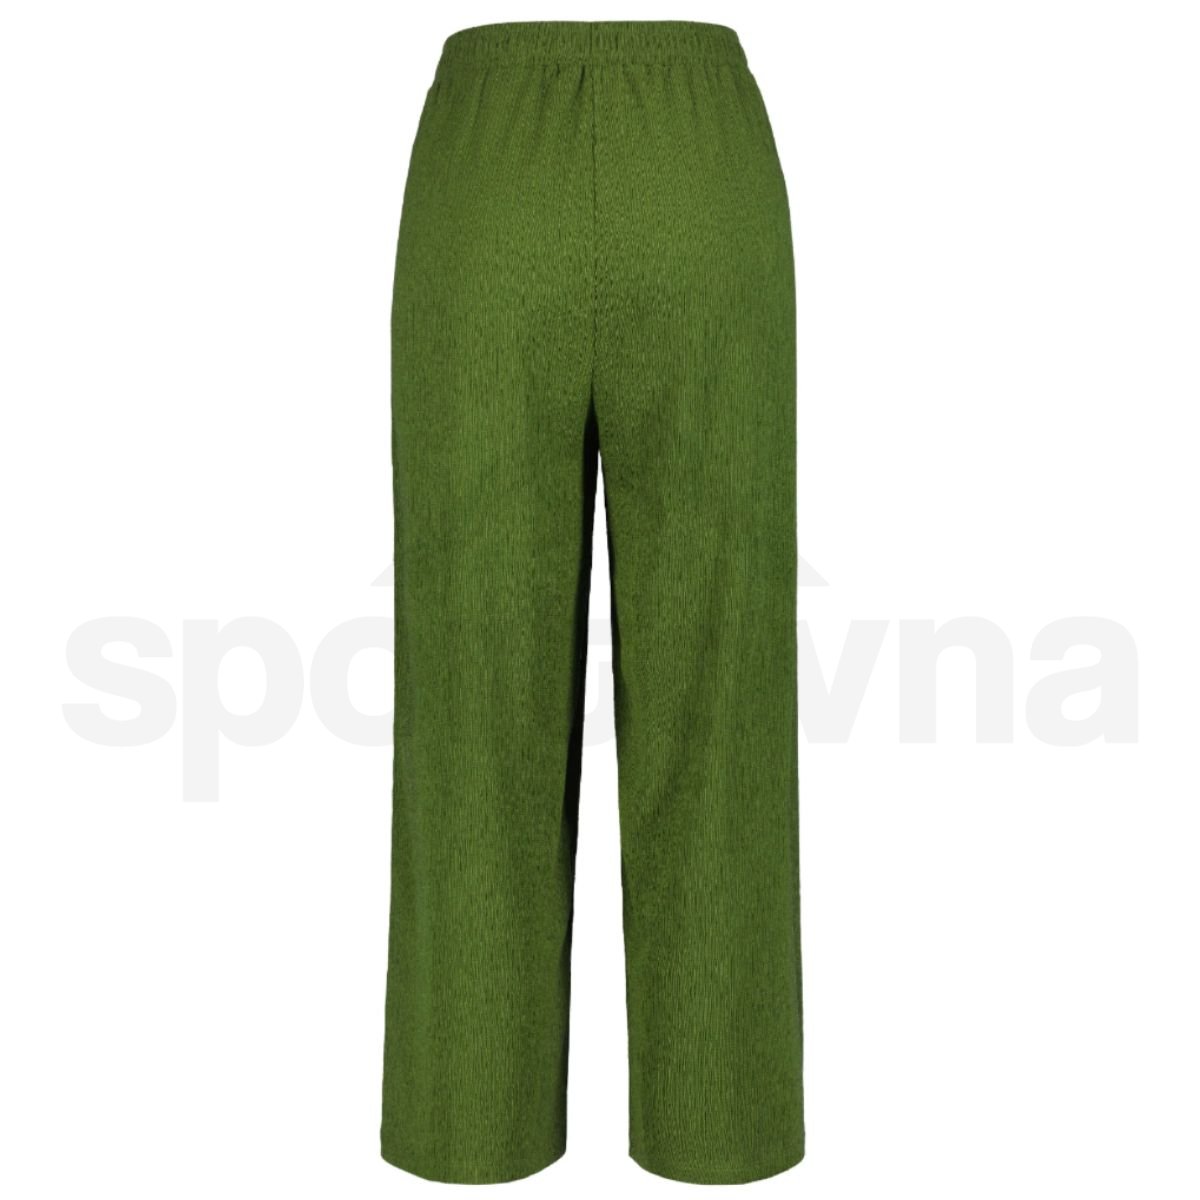 Kalhoty Luhta Haiko W - zelená